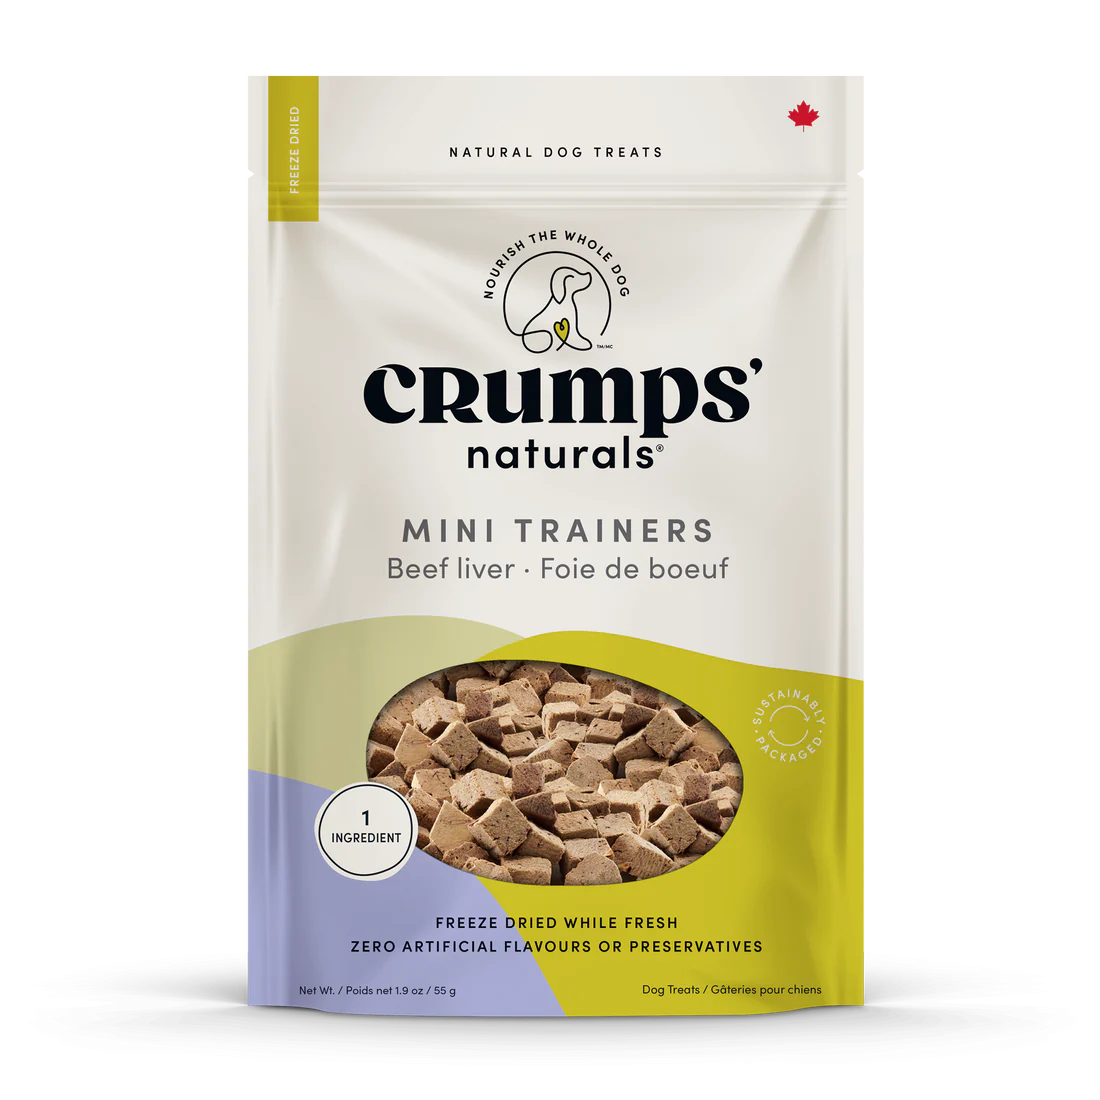 Crumps' Naturals Treats - Freeze-Dried Beef Liver Mini Trainers - Woofur Natural Pet Products